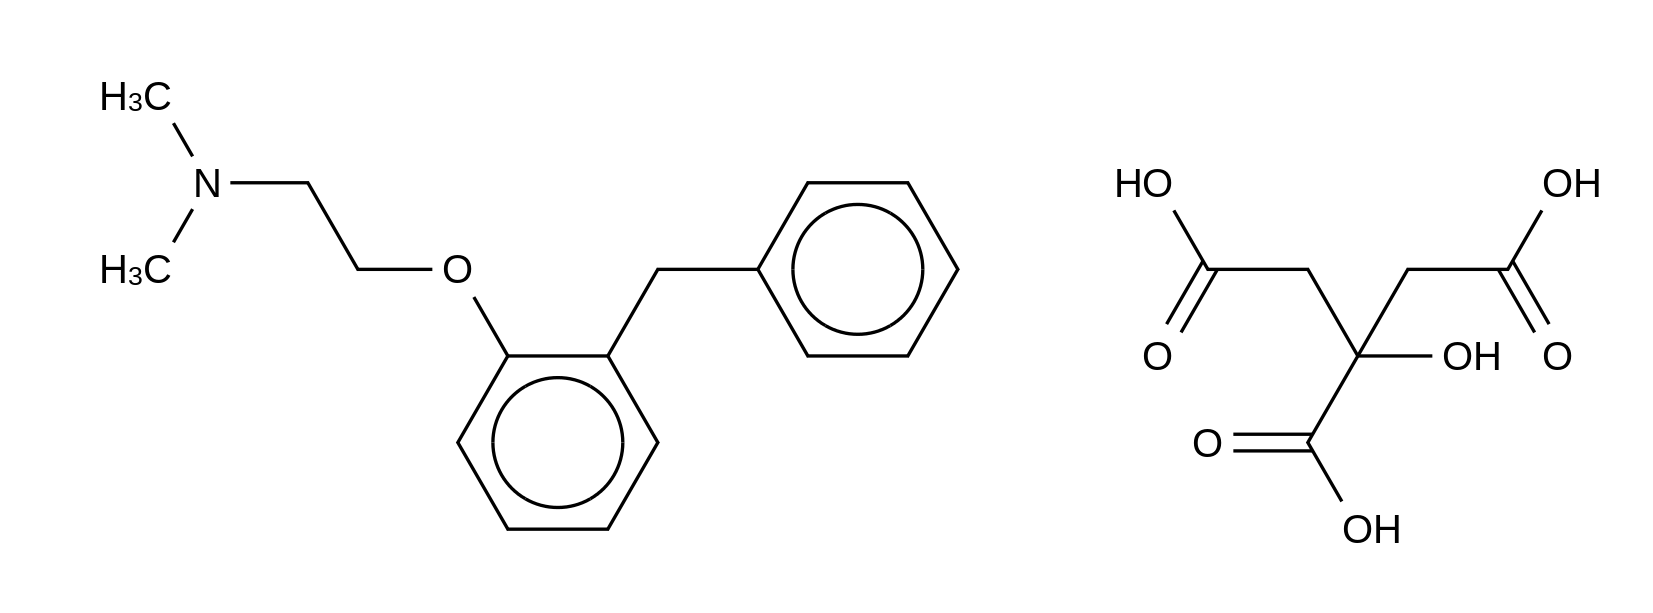 Phenyltoloxamine Citrate Salt